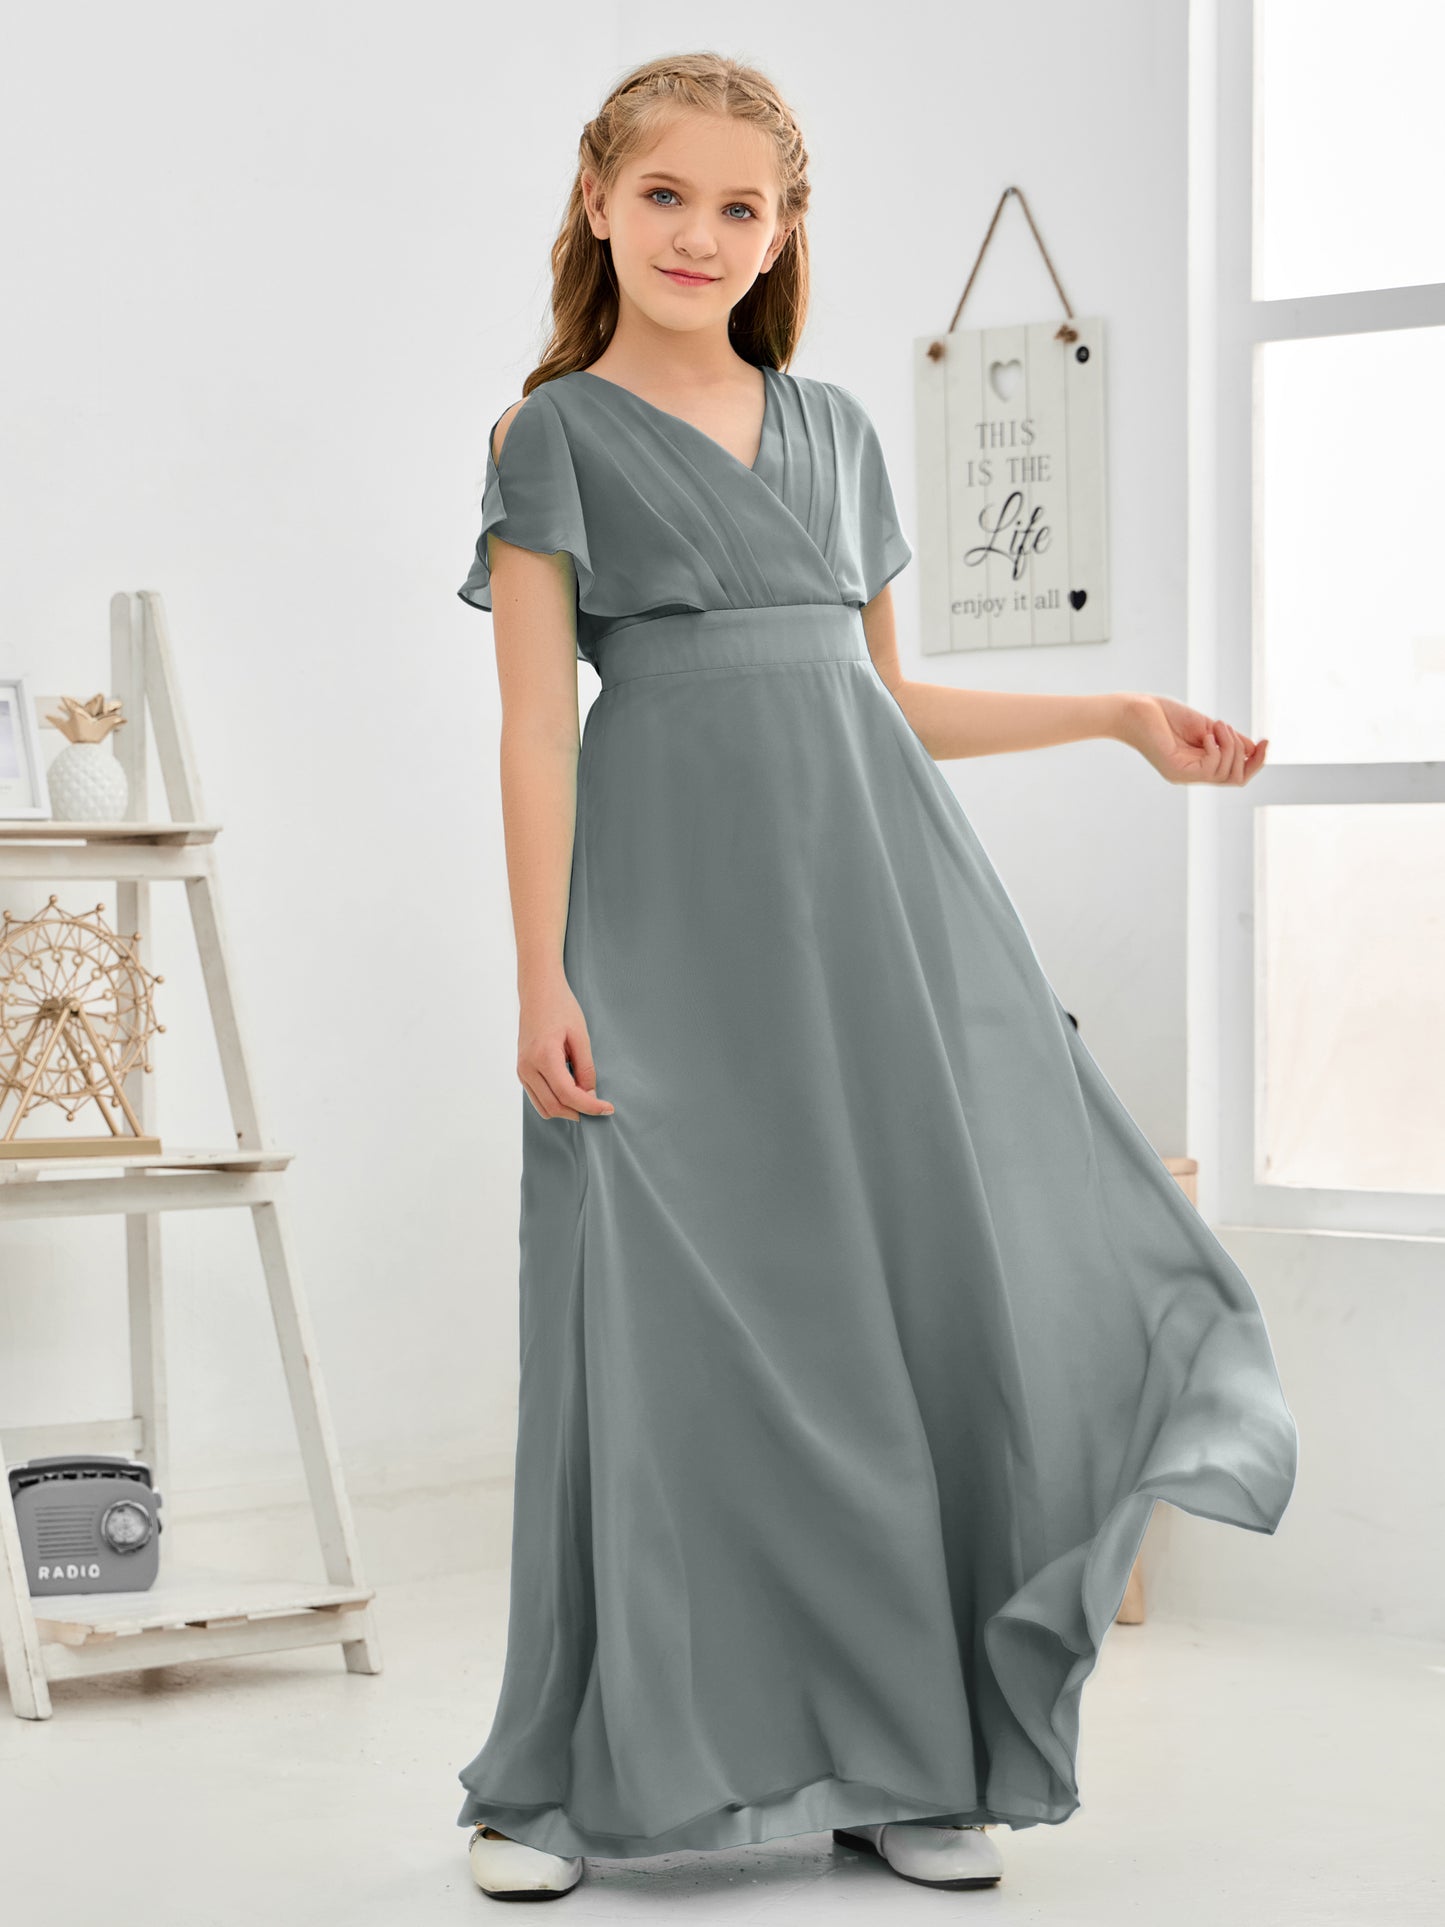 Short Sleeves Floor-Length Chiffon Junior Bridesmaid Dress